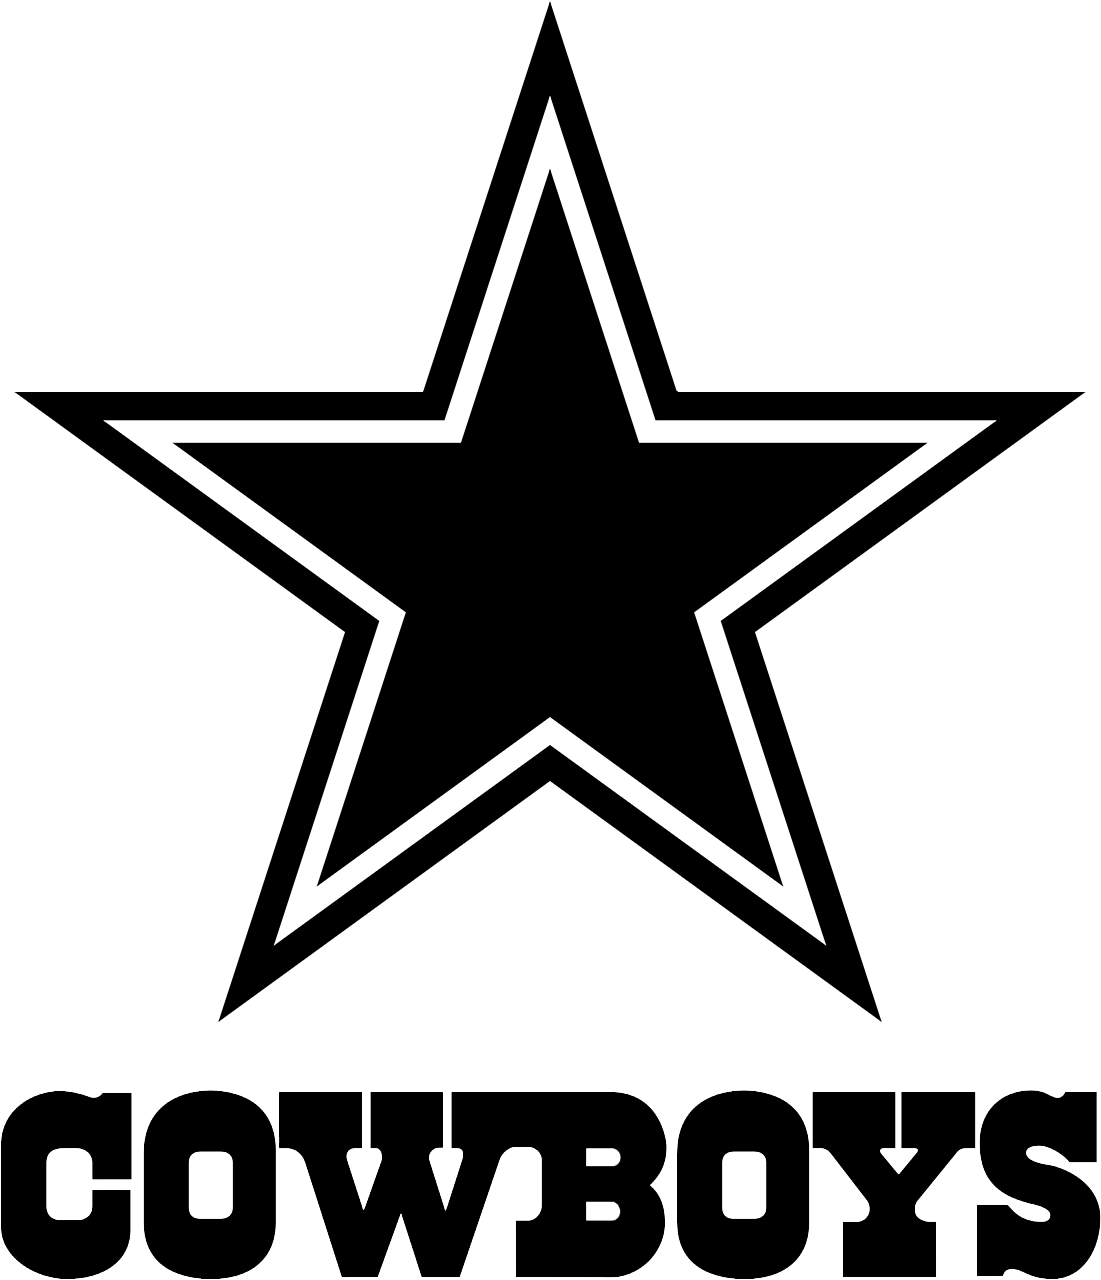 Cowboy Logo PNG Photo